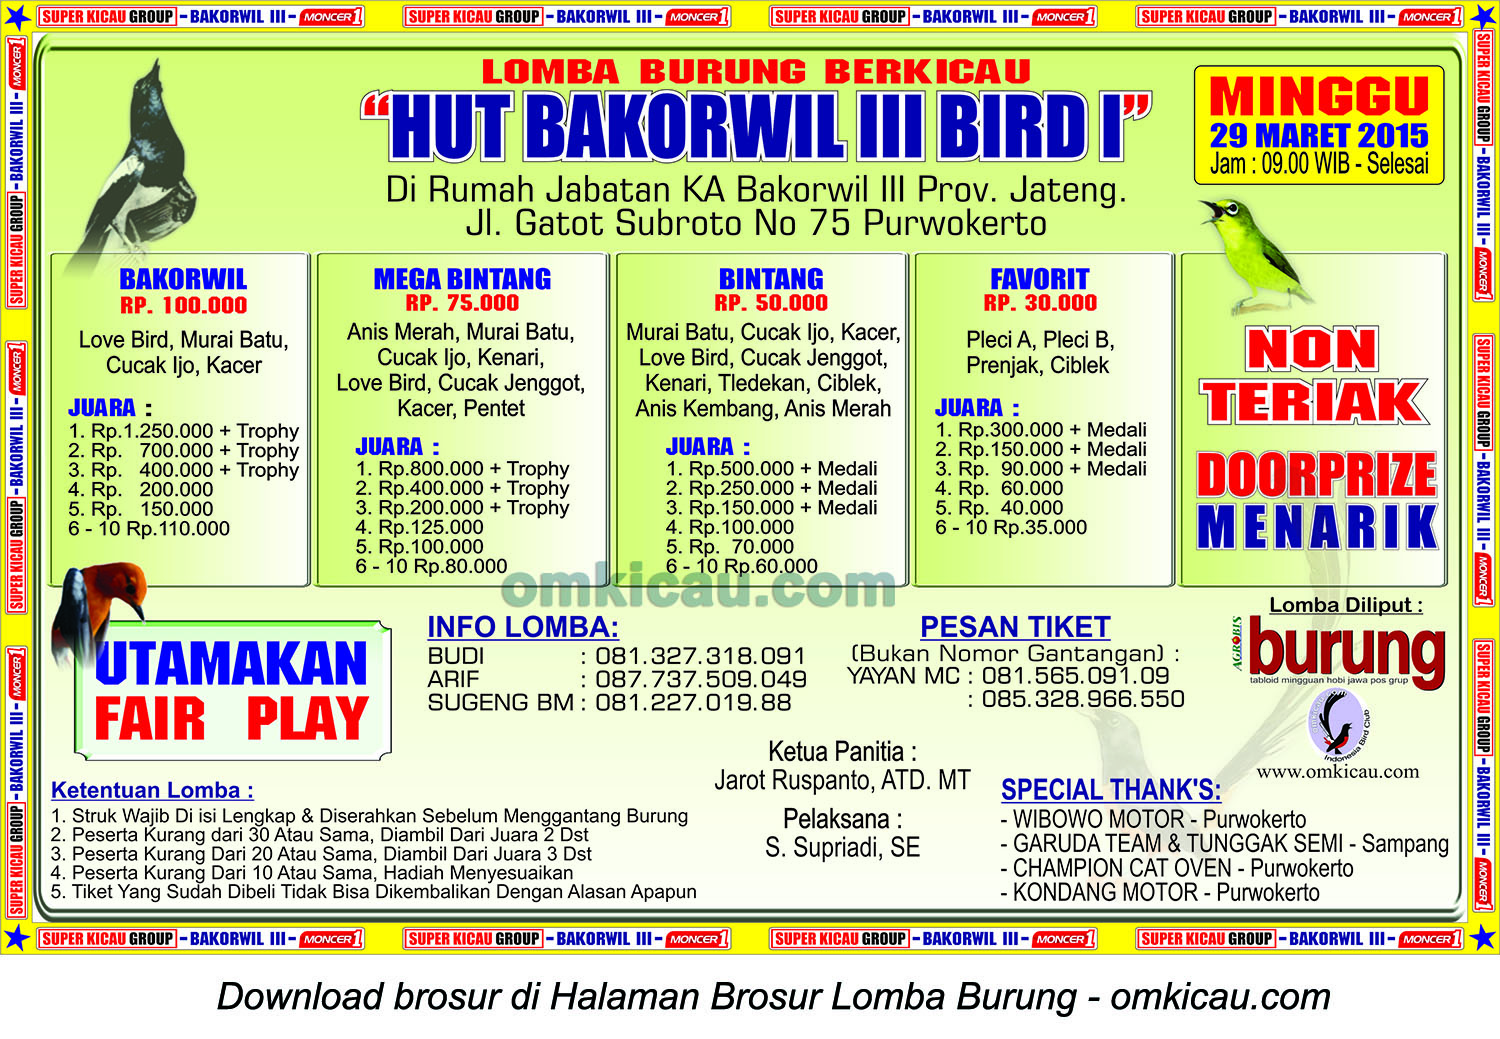 Brosur Lomba Burung Berkicau HUT Bakorwil III Bird I, Purwokerto, 29 Maret 2015